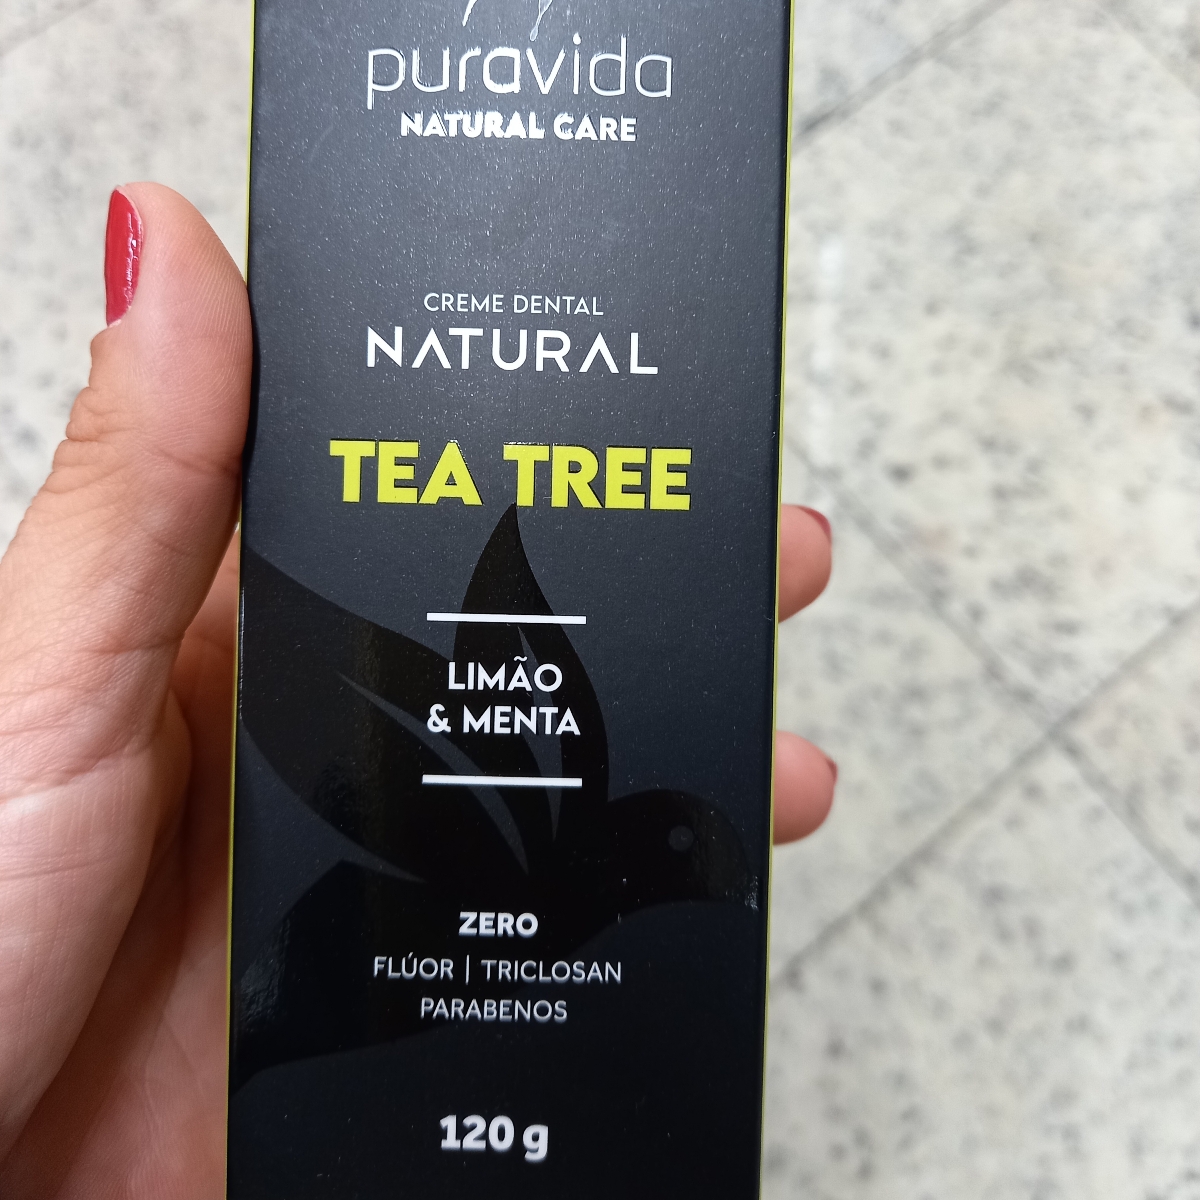 Puravida Creme dental Natural Tea Tree Review | abillion